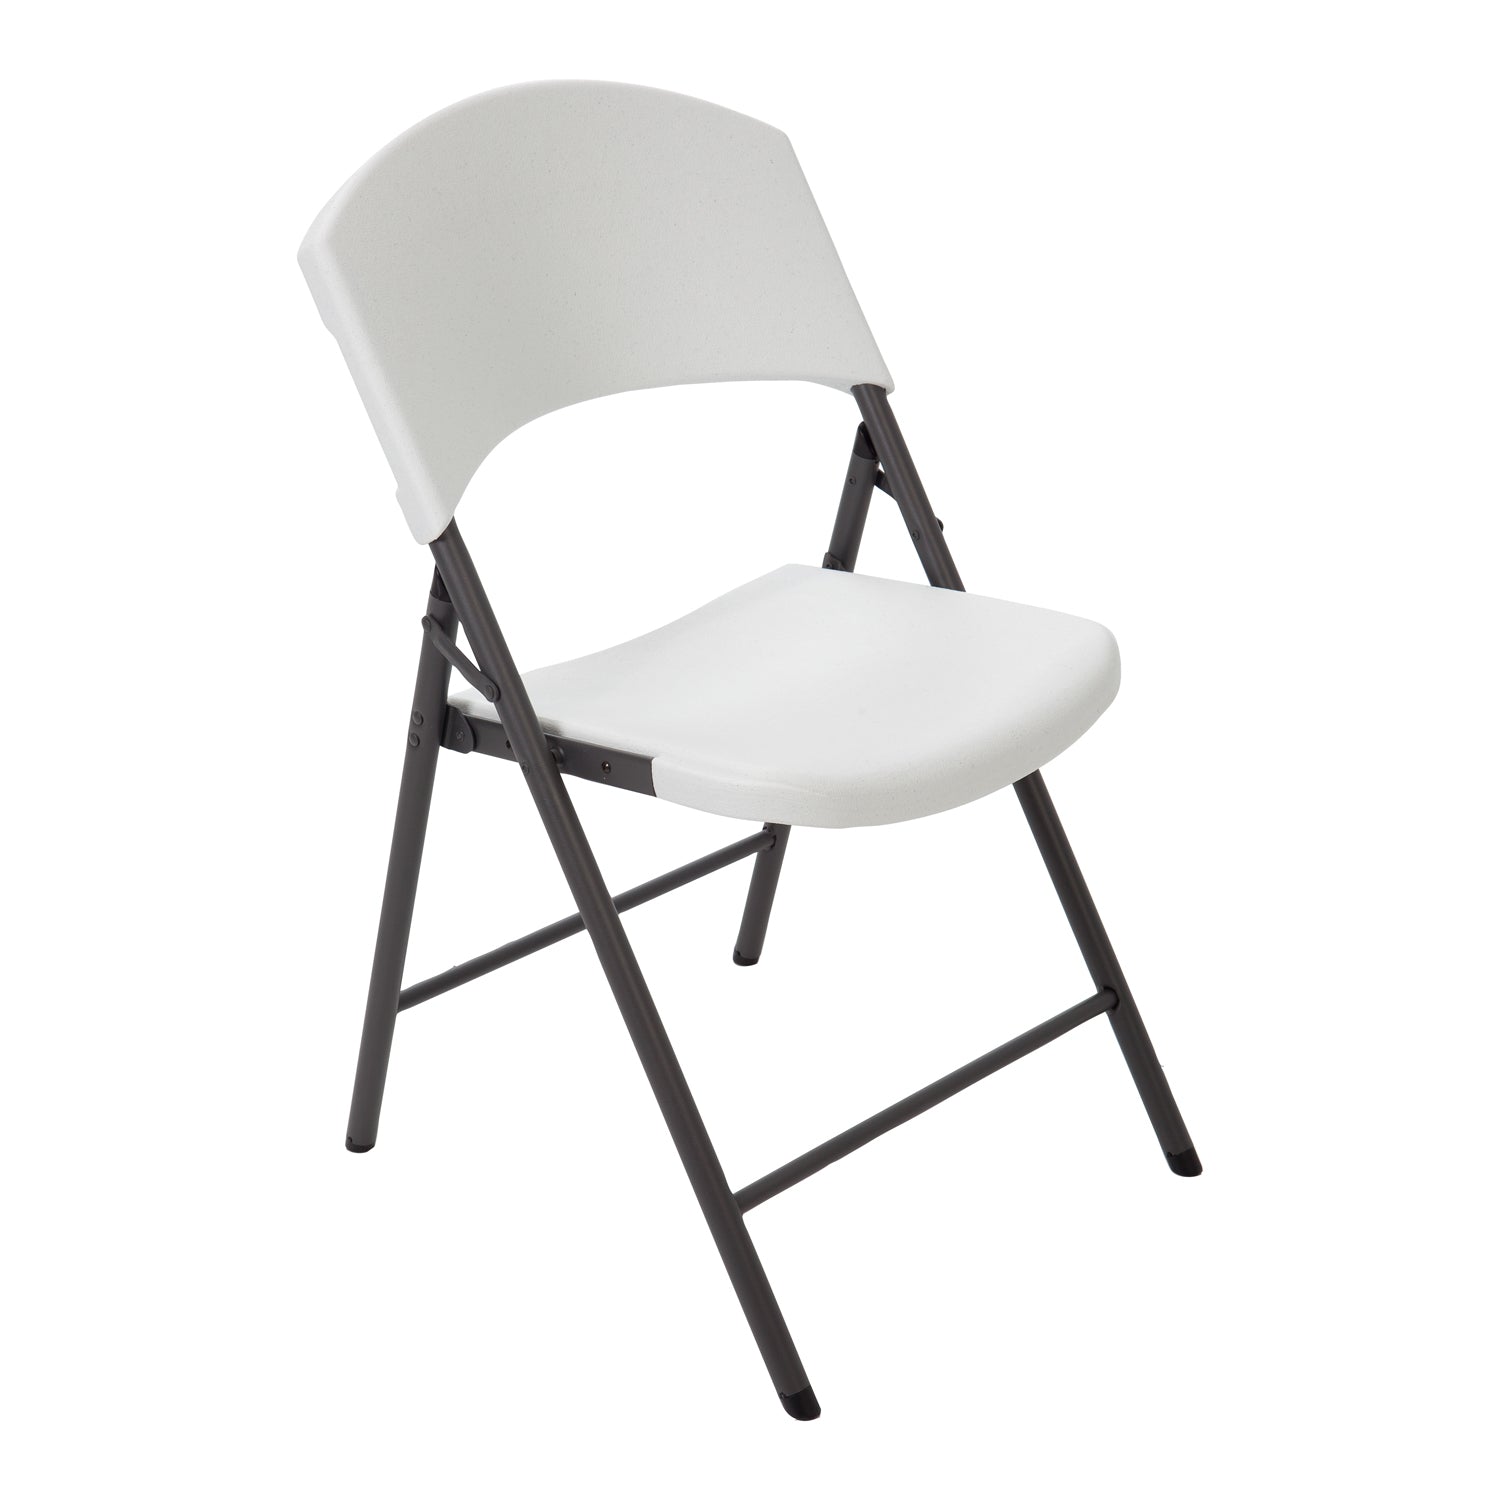 Lifetime Classic Light Commercial Grade Folding Chair 2810